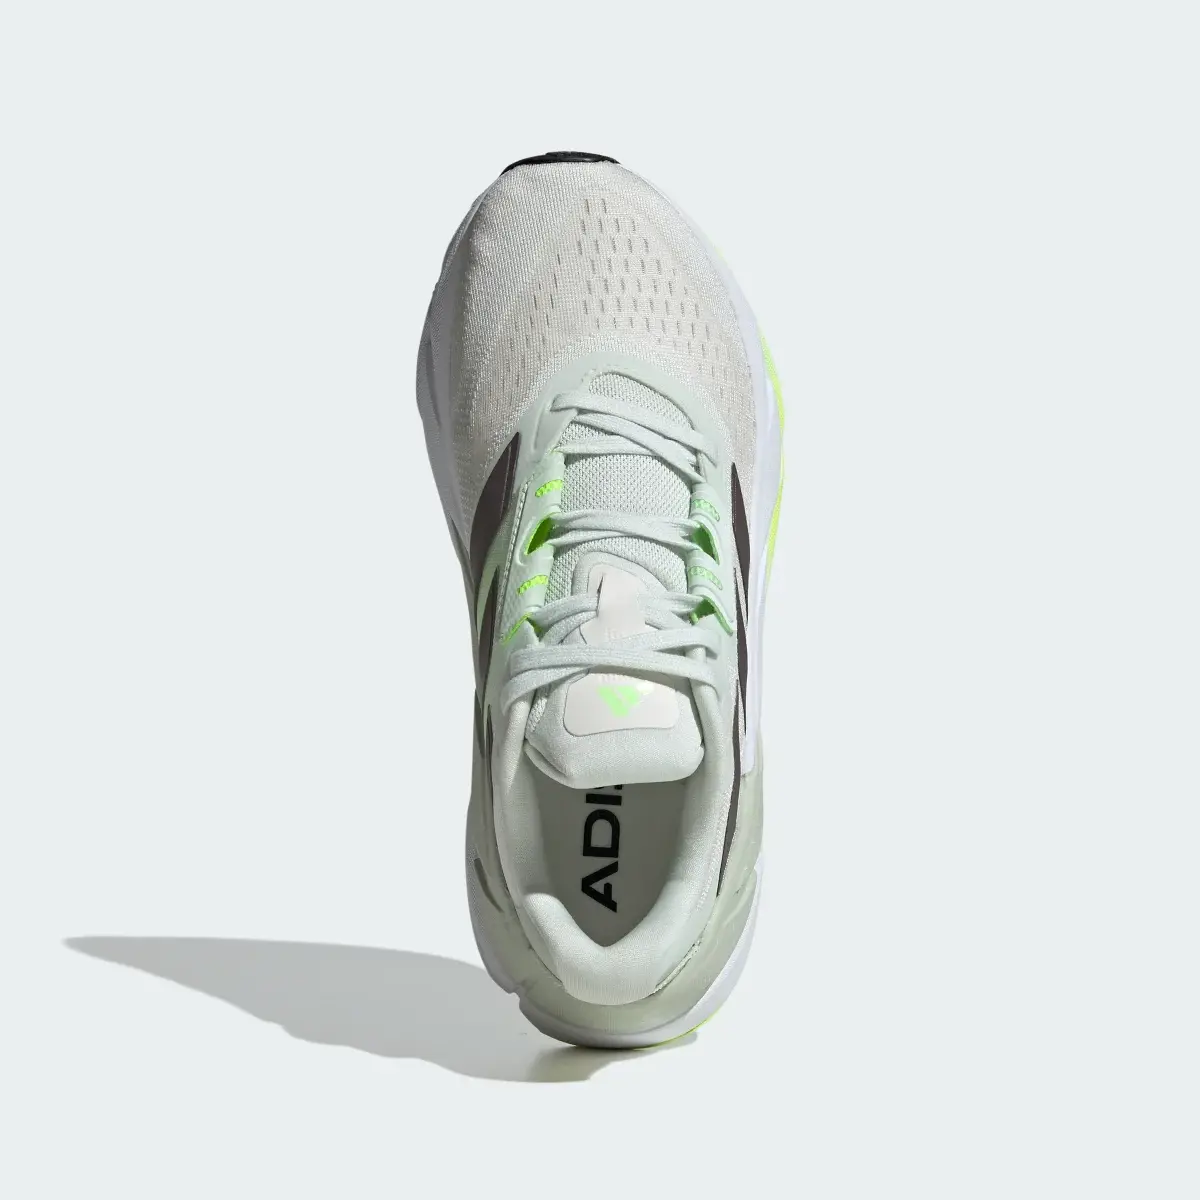 Adidas Scarpe adistar CS 2.0. 3